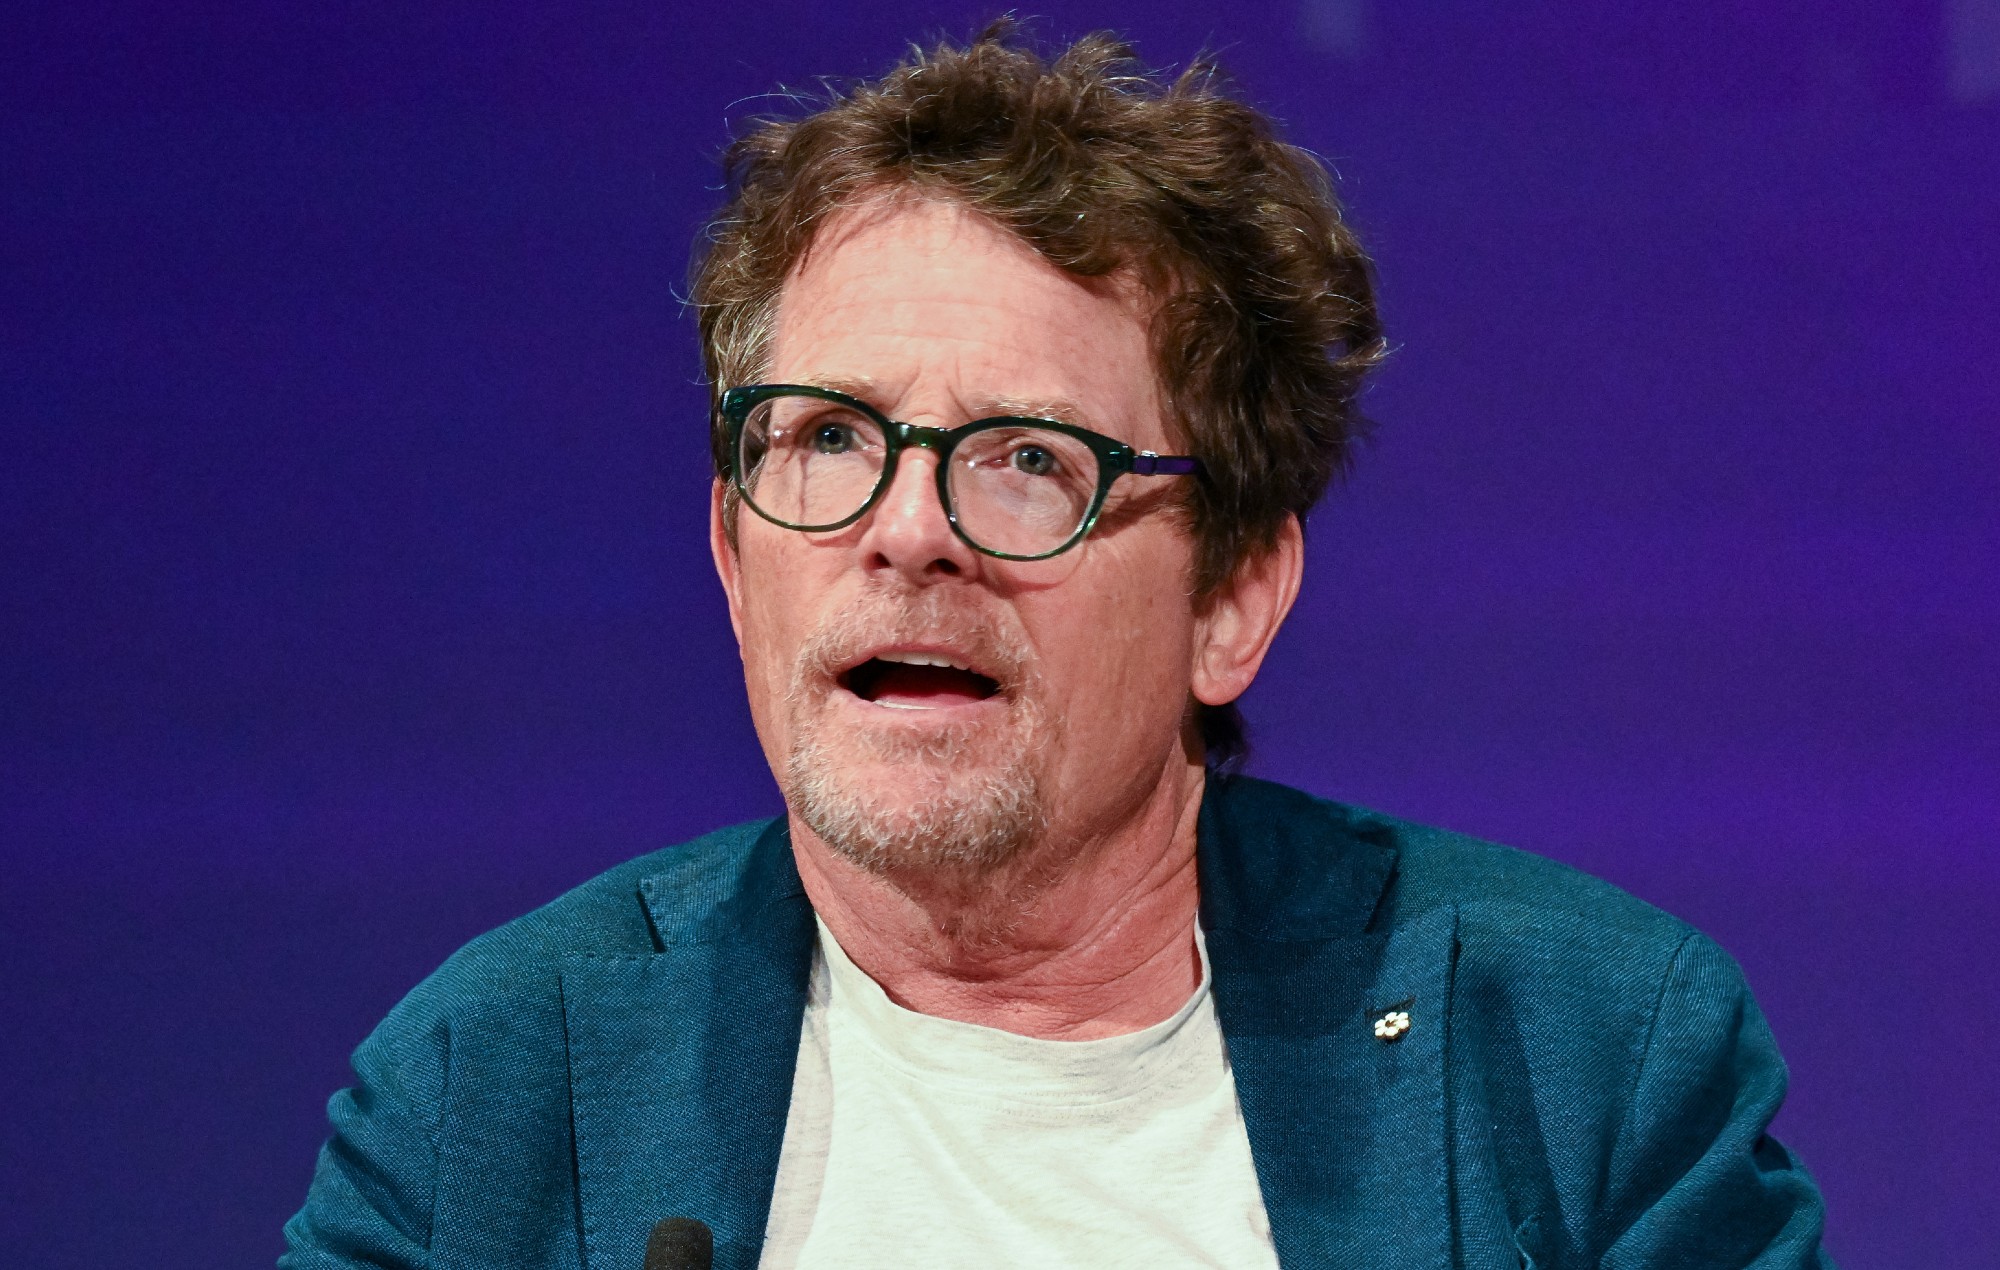 Michael J. Fox reveals he’s open to acting again